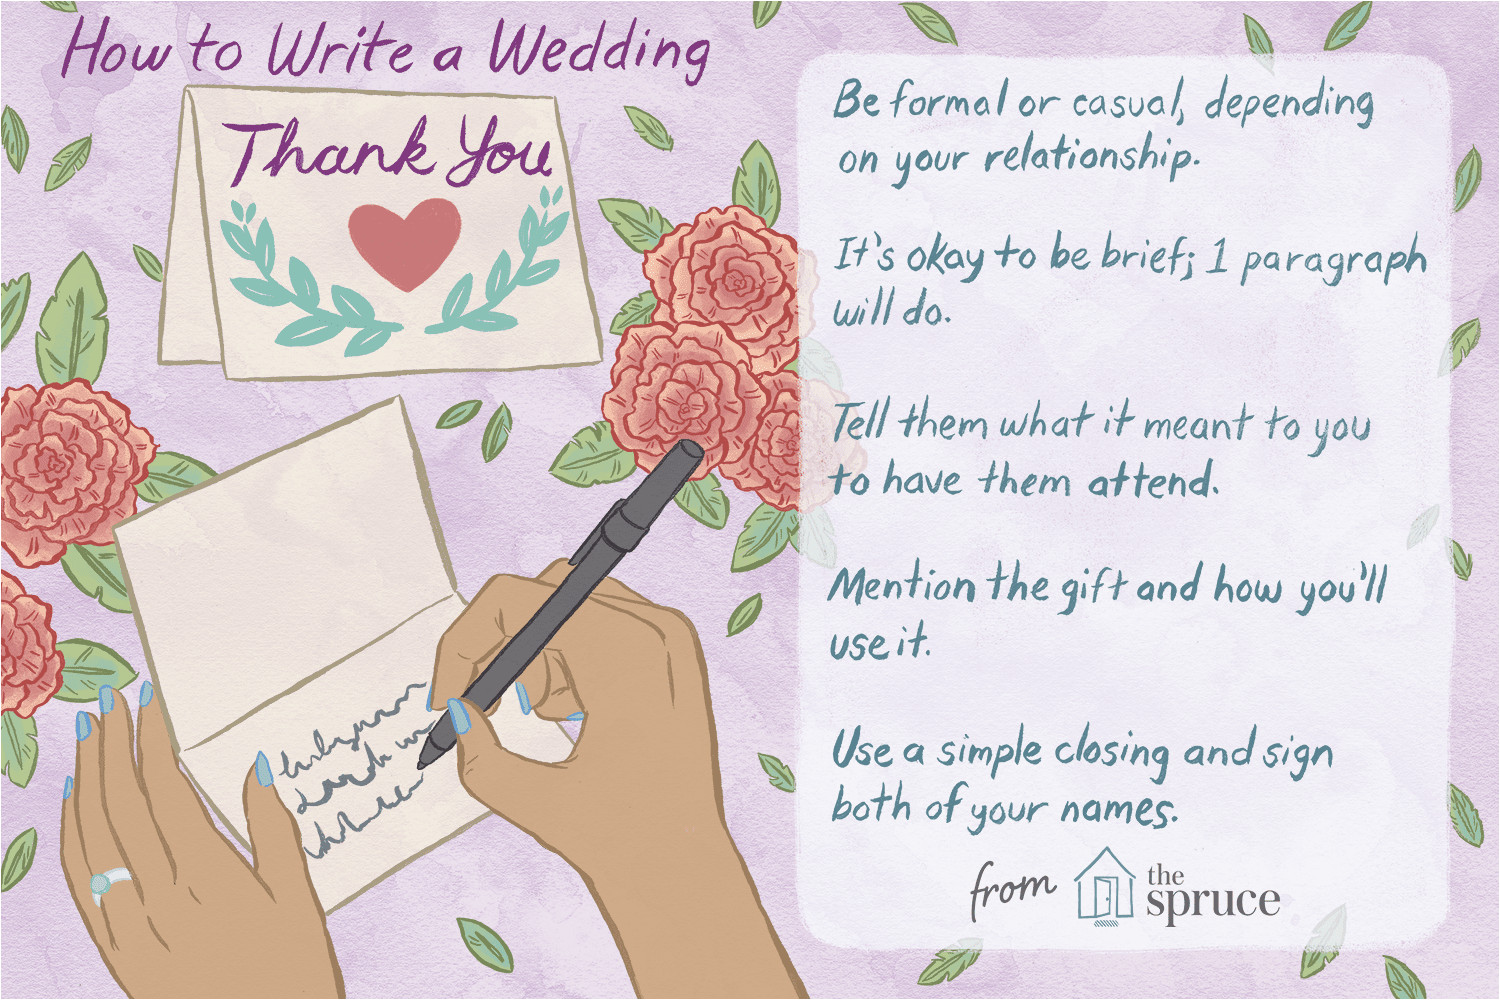 how to write wedding thank you cards 3489714 v2 5c7441b8c9e77c000107b63d png